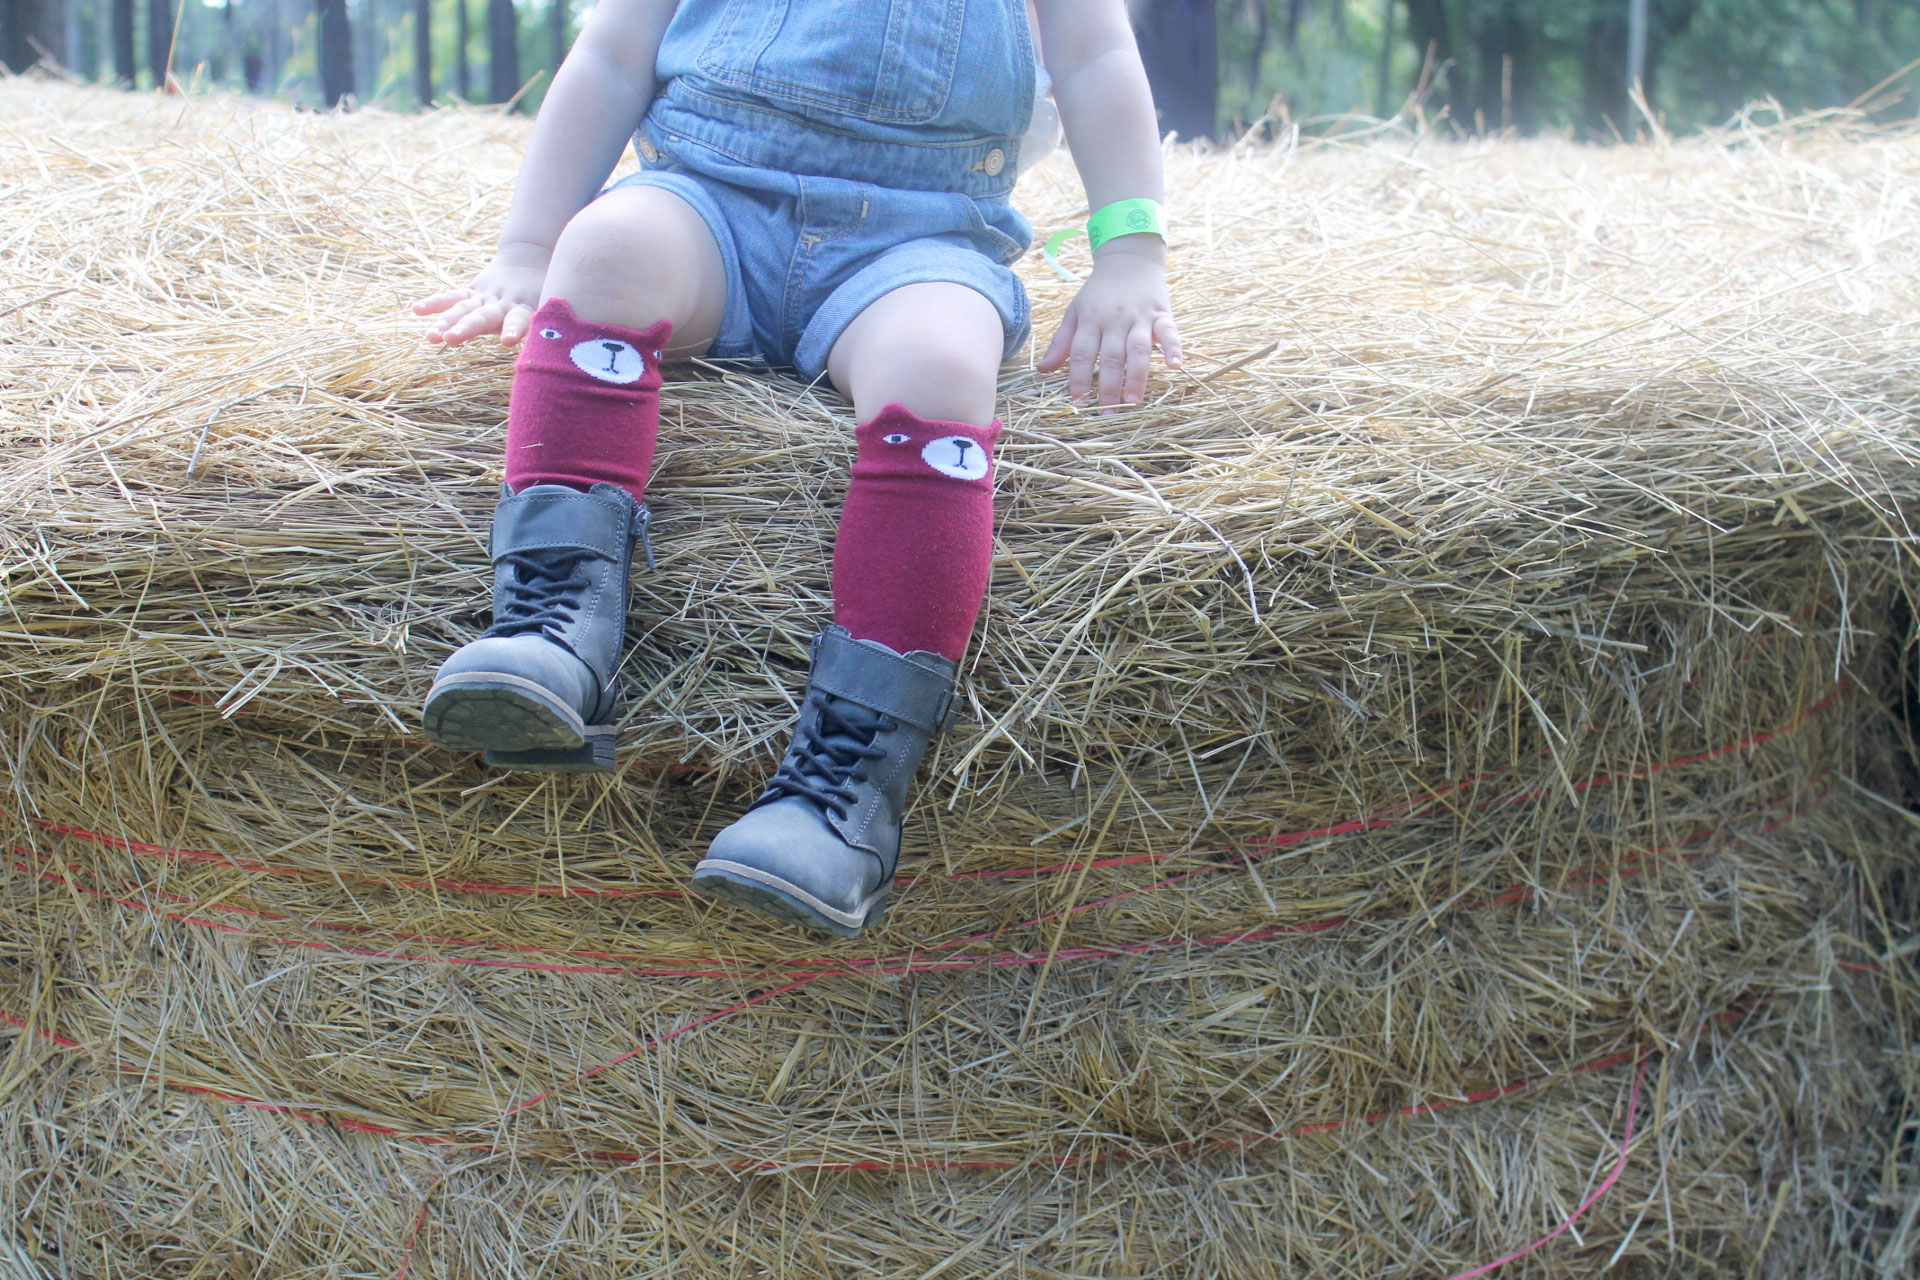 Scarlett's-legs-on-hay